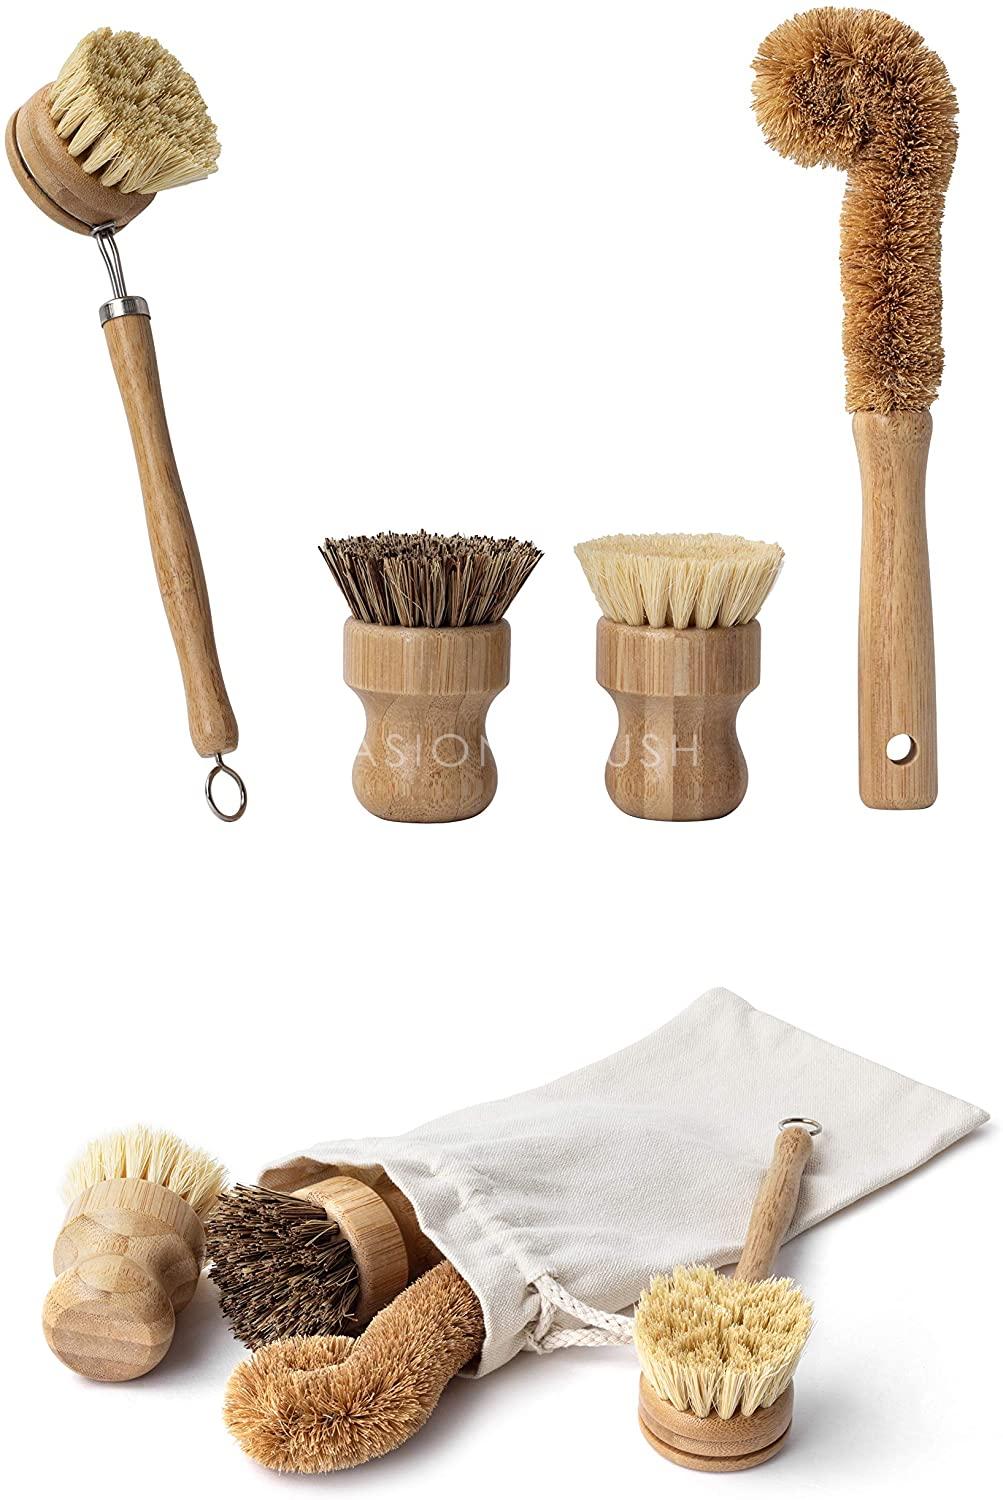 Wooden Sisal Dish Cleaning Brush Kit